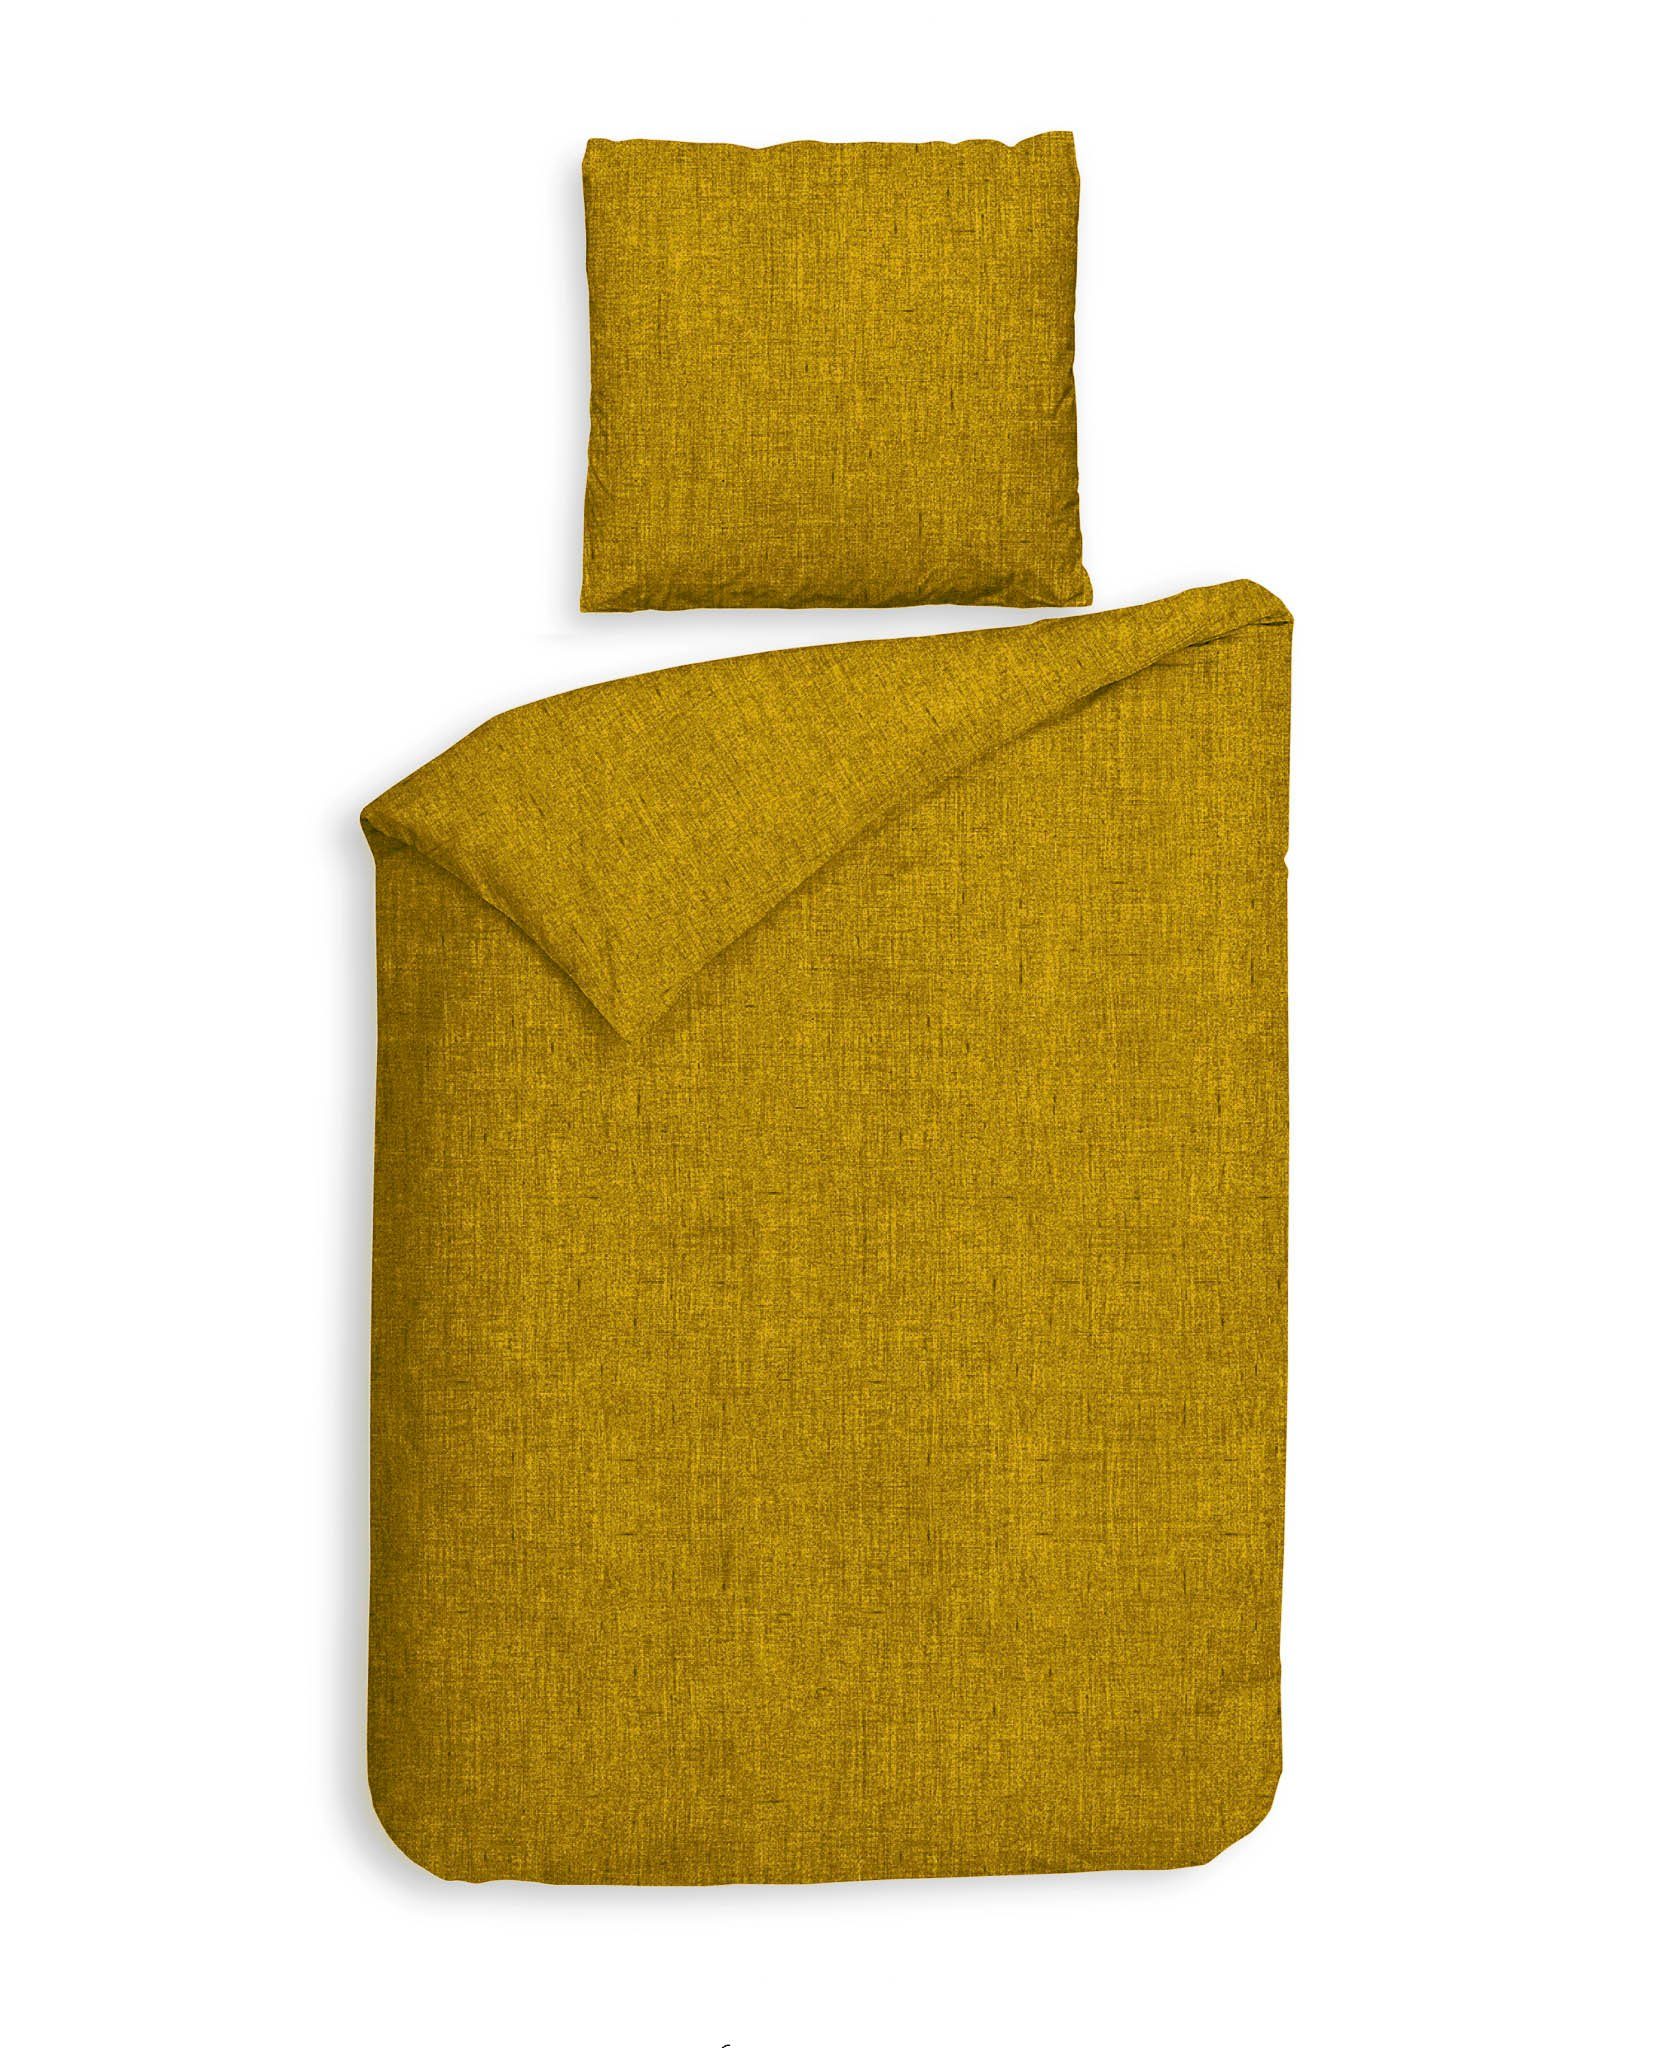 Bettwäsche Franela Sunset Gold 135x200 + Kissenbezug 80 x 80 cm, Heckett and Lane, Baumolle, 2 teilig, Bettbezug Kopfkissenbezug Set kuschelig weich hochwertig